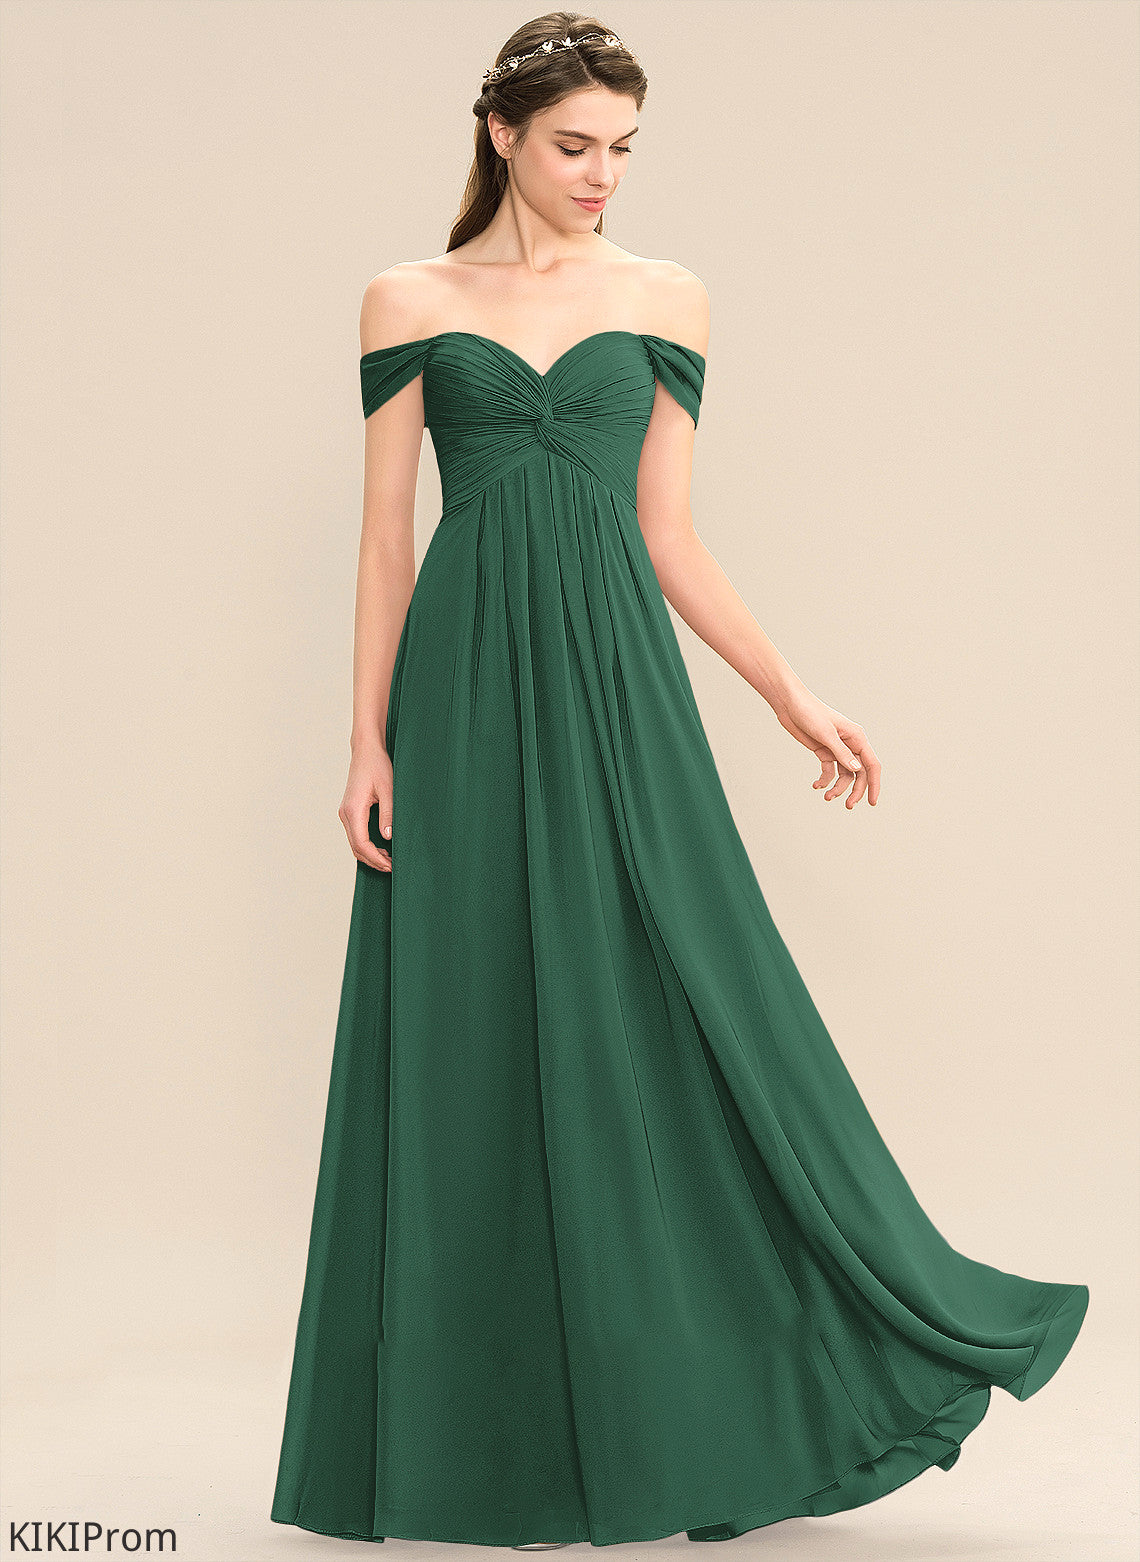 Embellishment Ruffle Off-the-Shoulder Silhouette Length Floor-Length Neckline A-Line Fabric Delaney High Low Sleeveless Bridesmaid Dresses